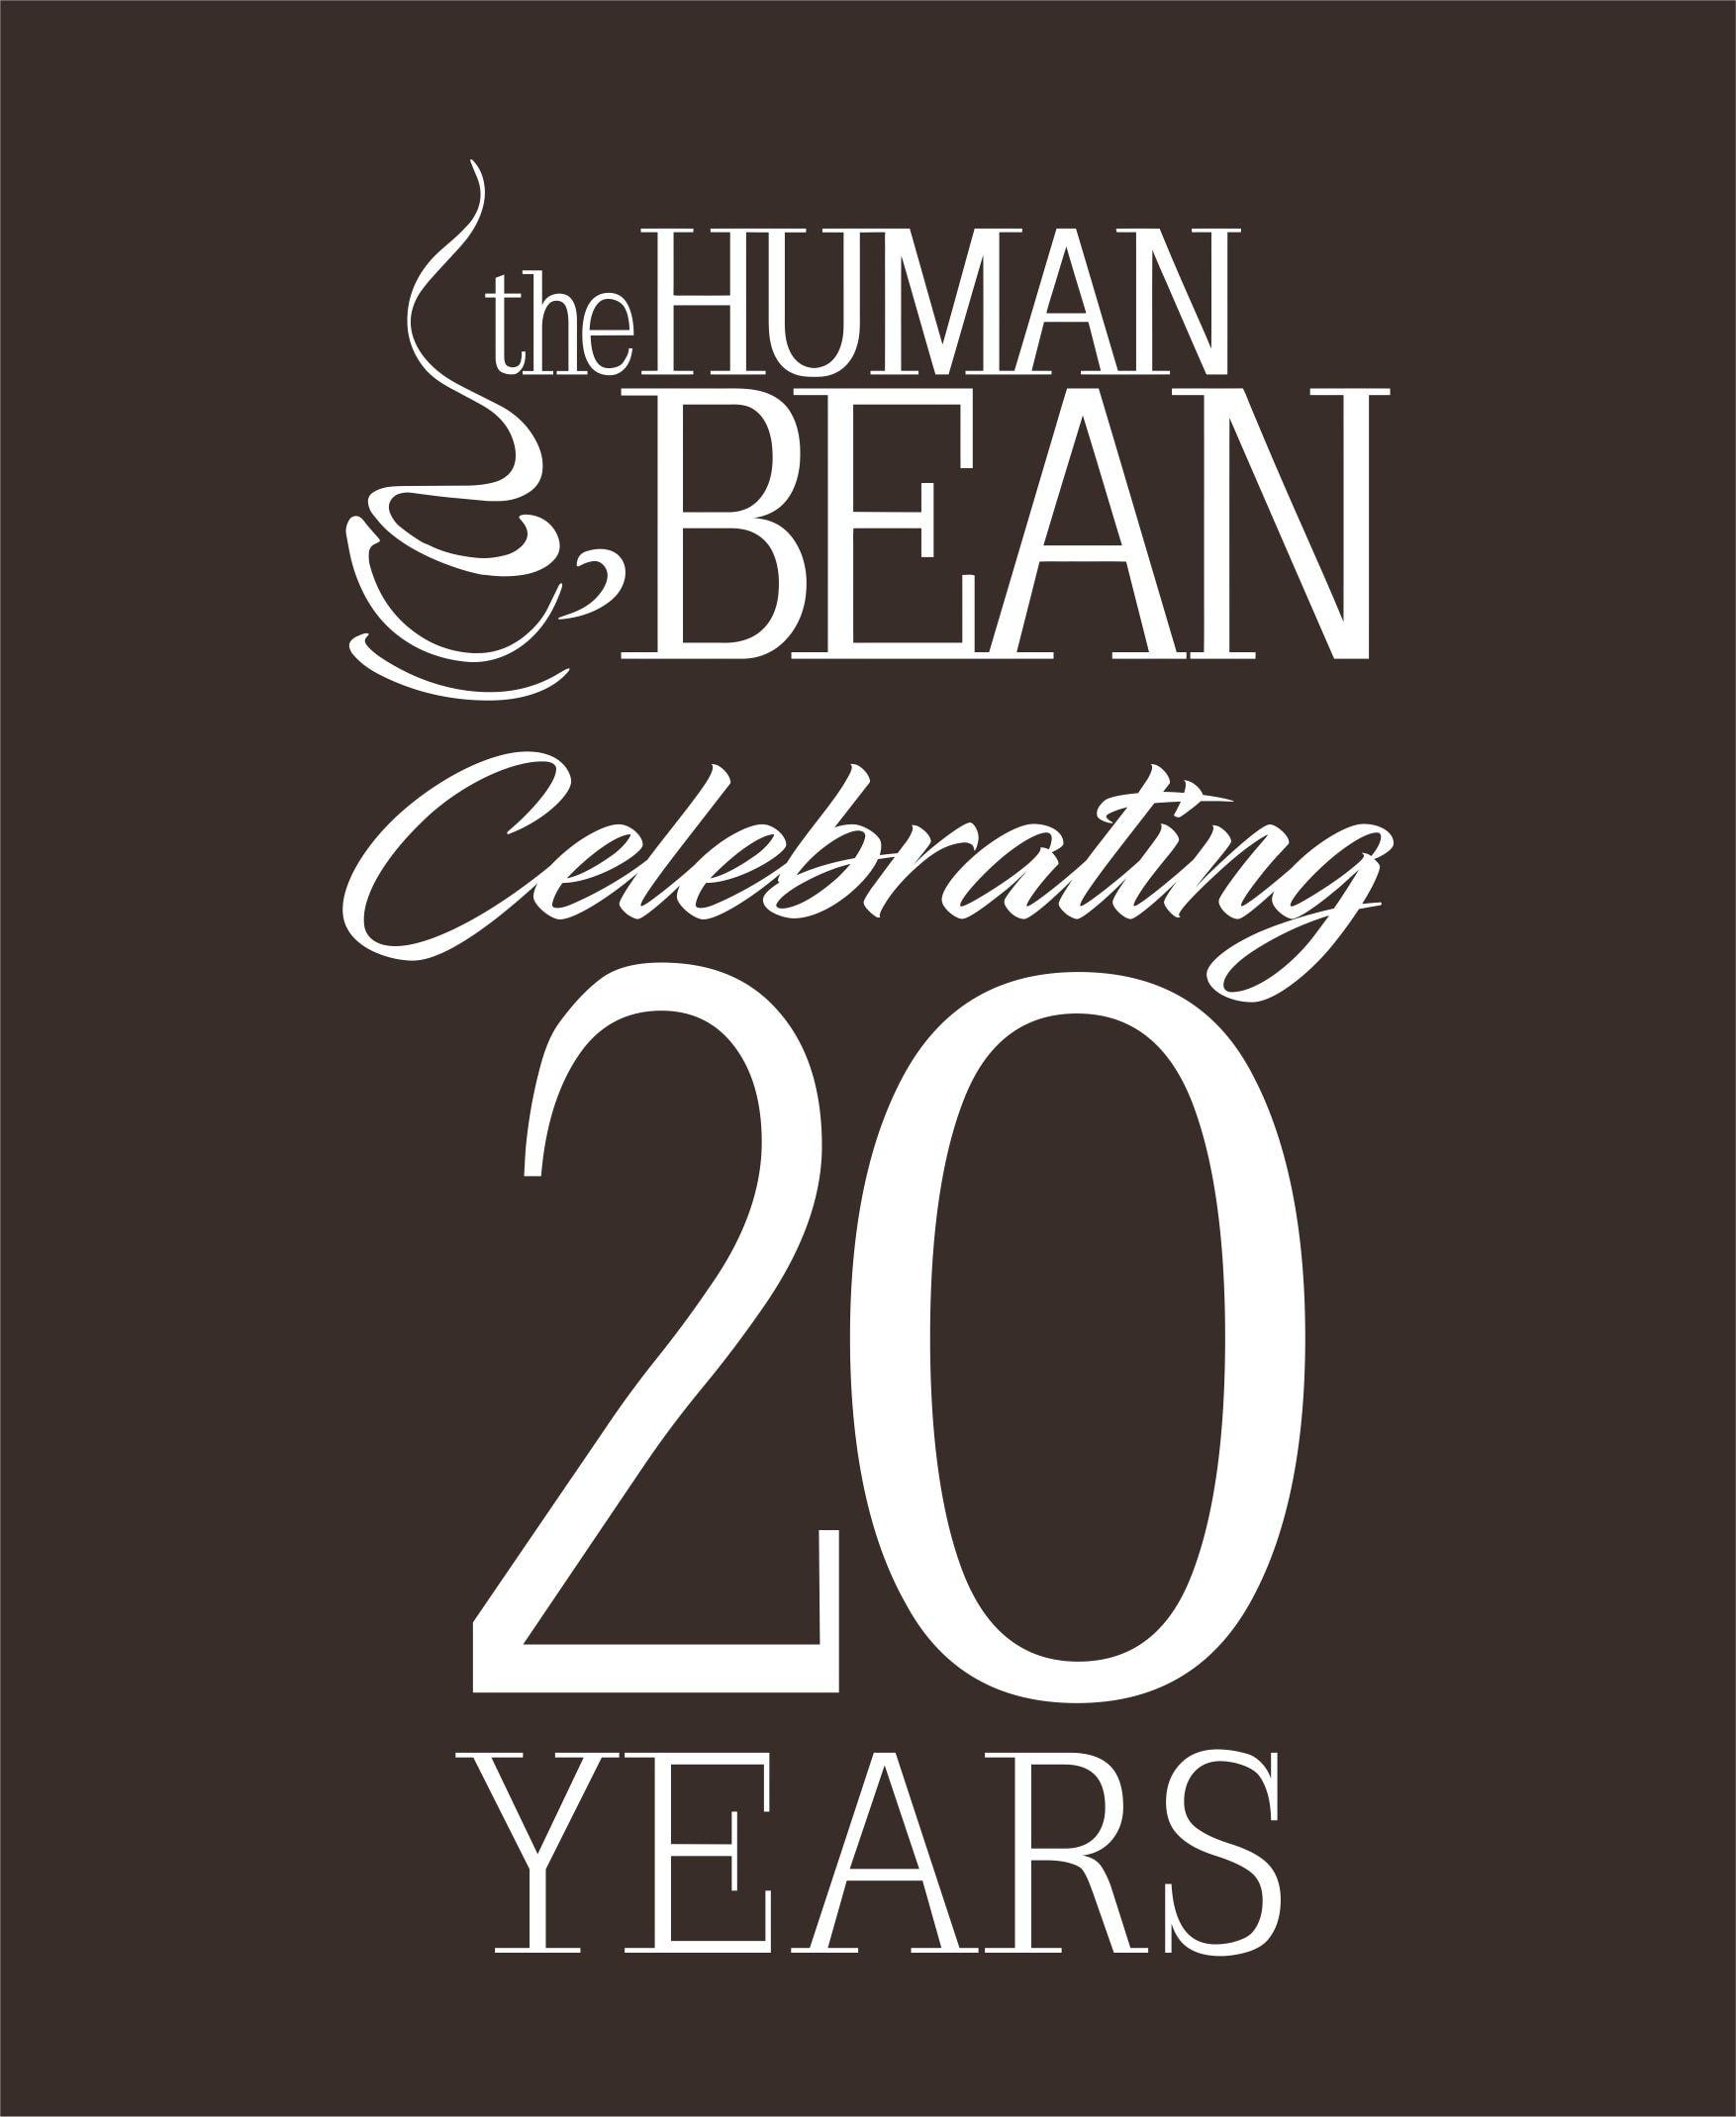 The Human Bean Company Logo - Human Bean Drive-Thru Franchise | About The Human Bean